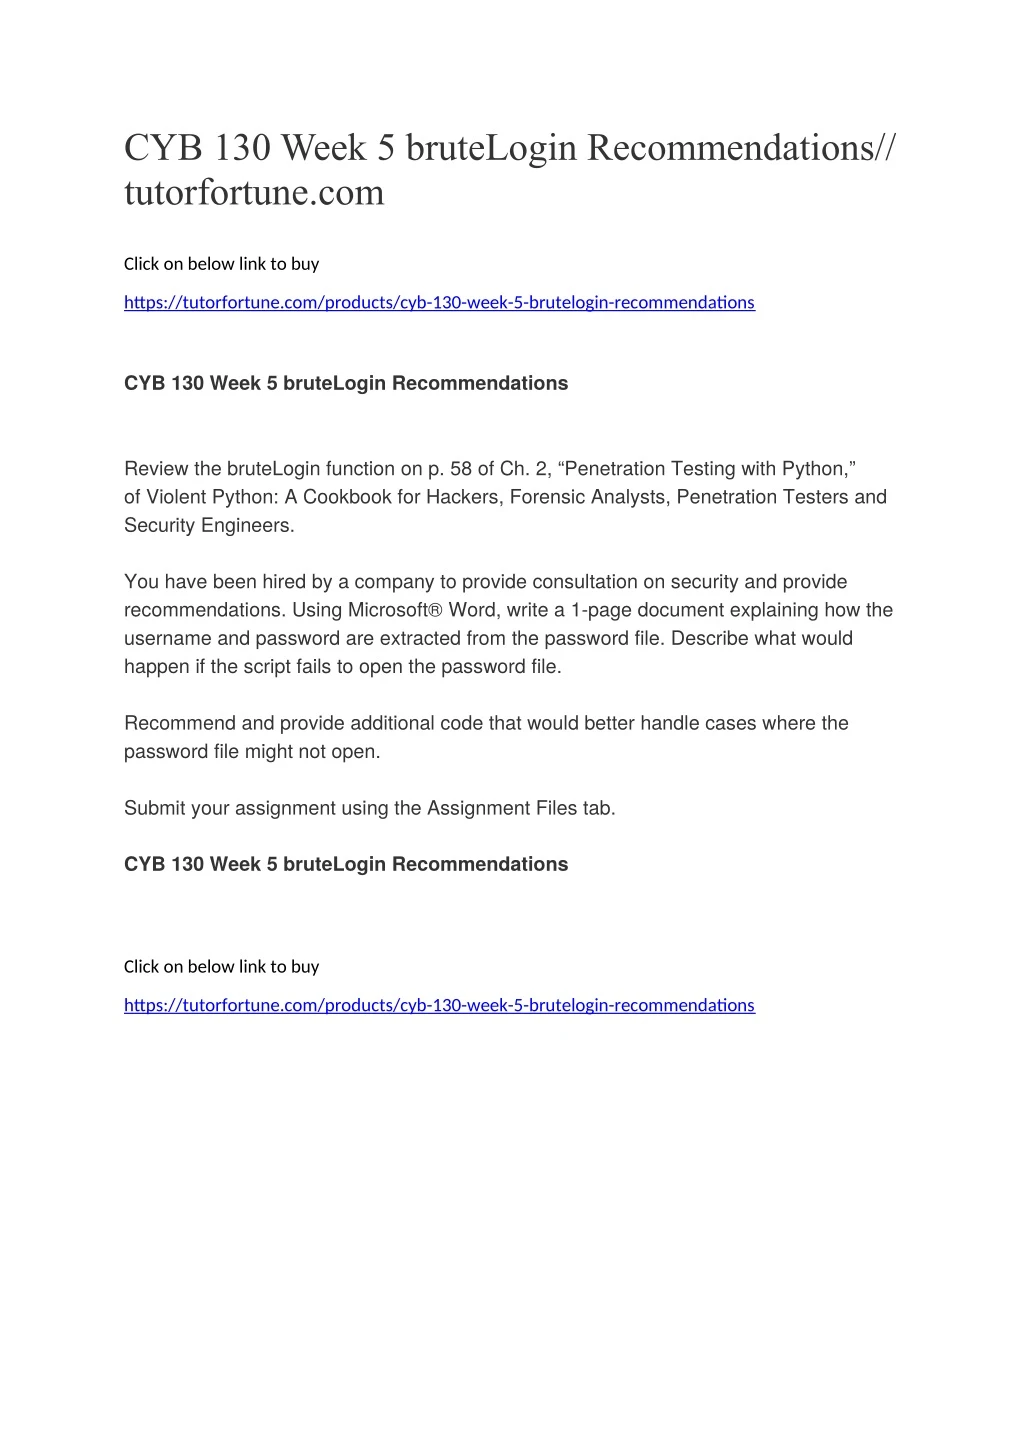 cyb 130 week 5 brutelogin recommendations